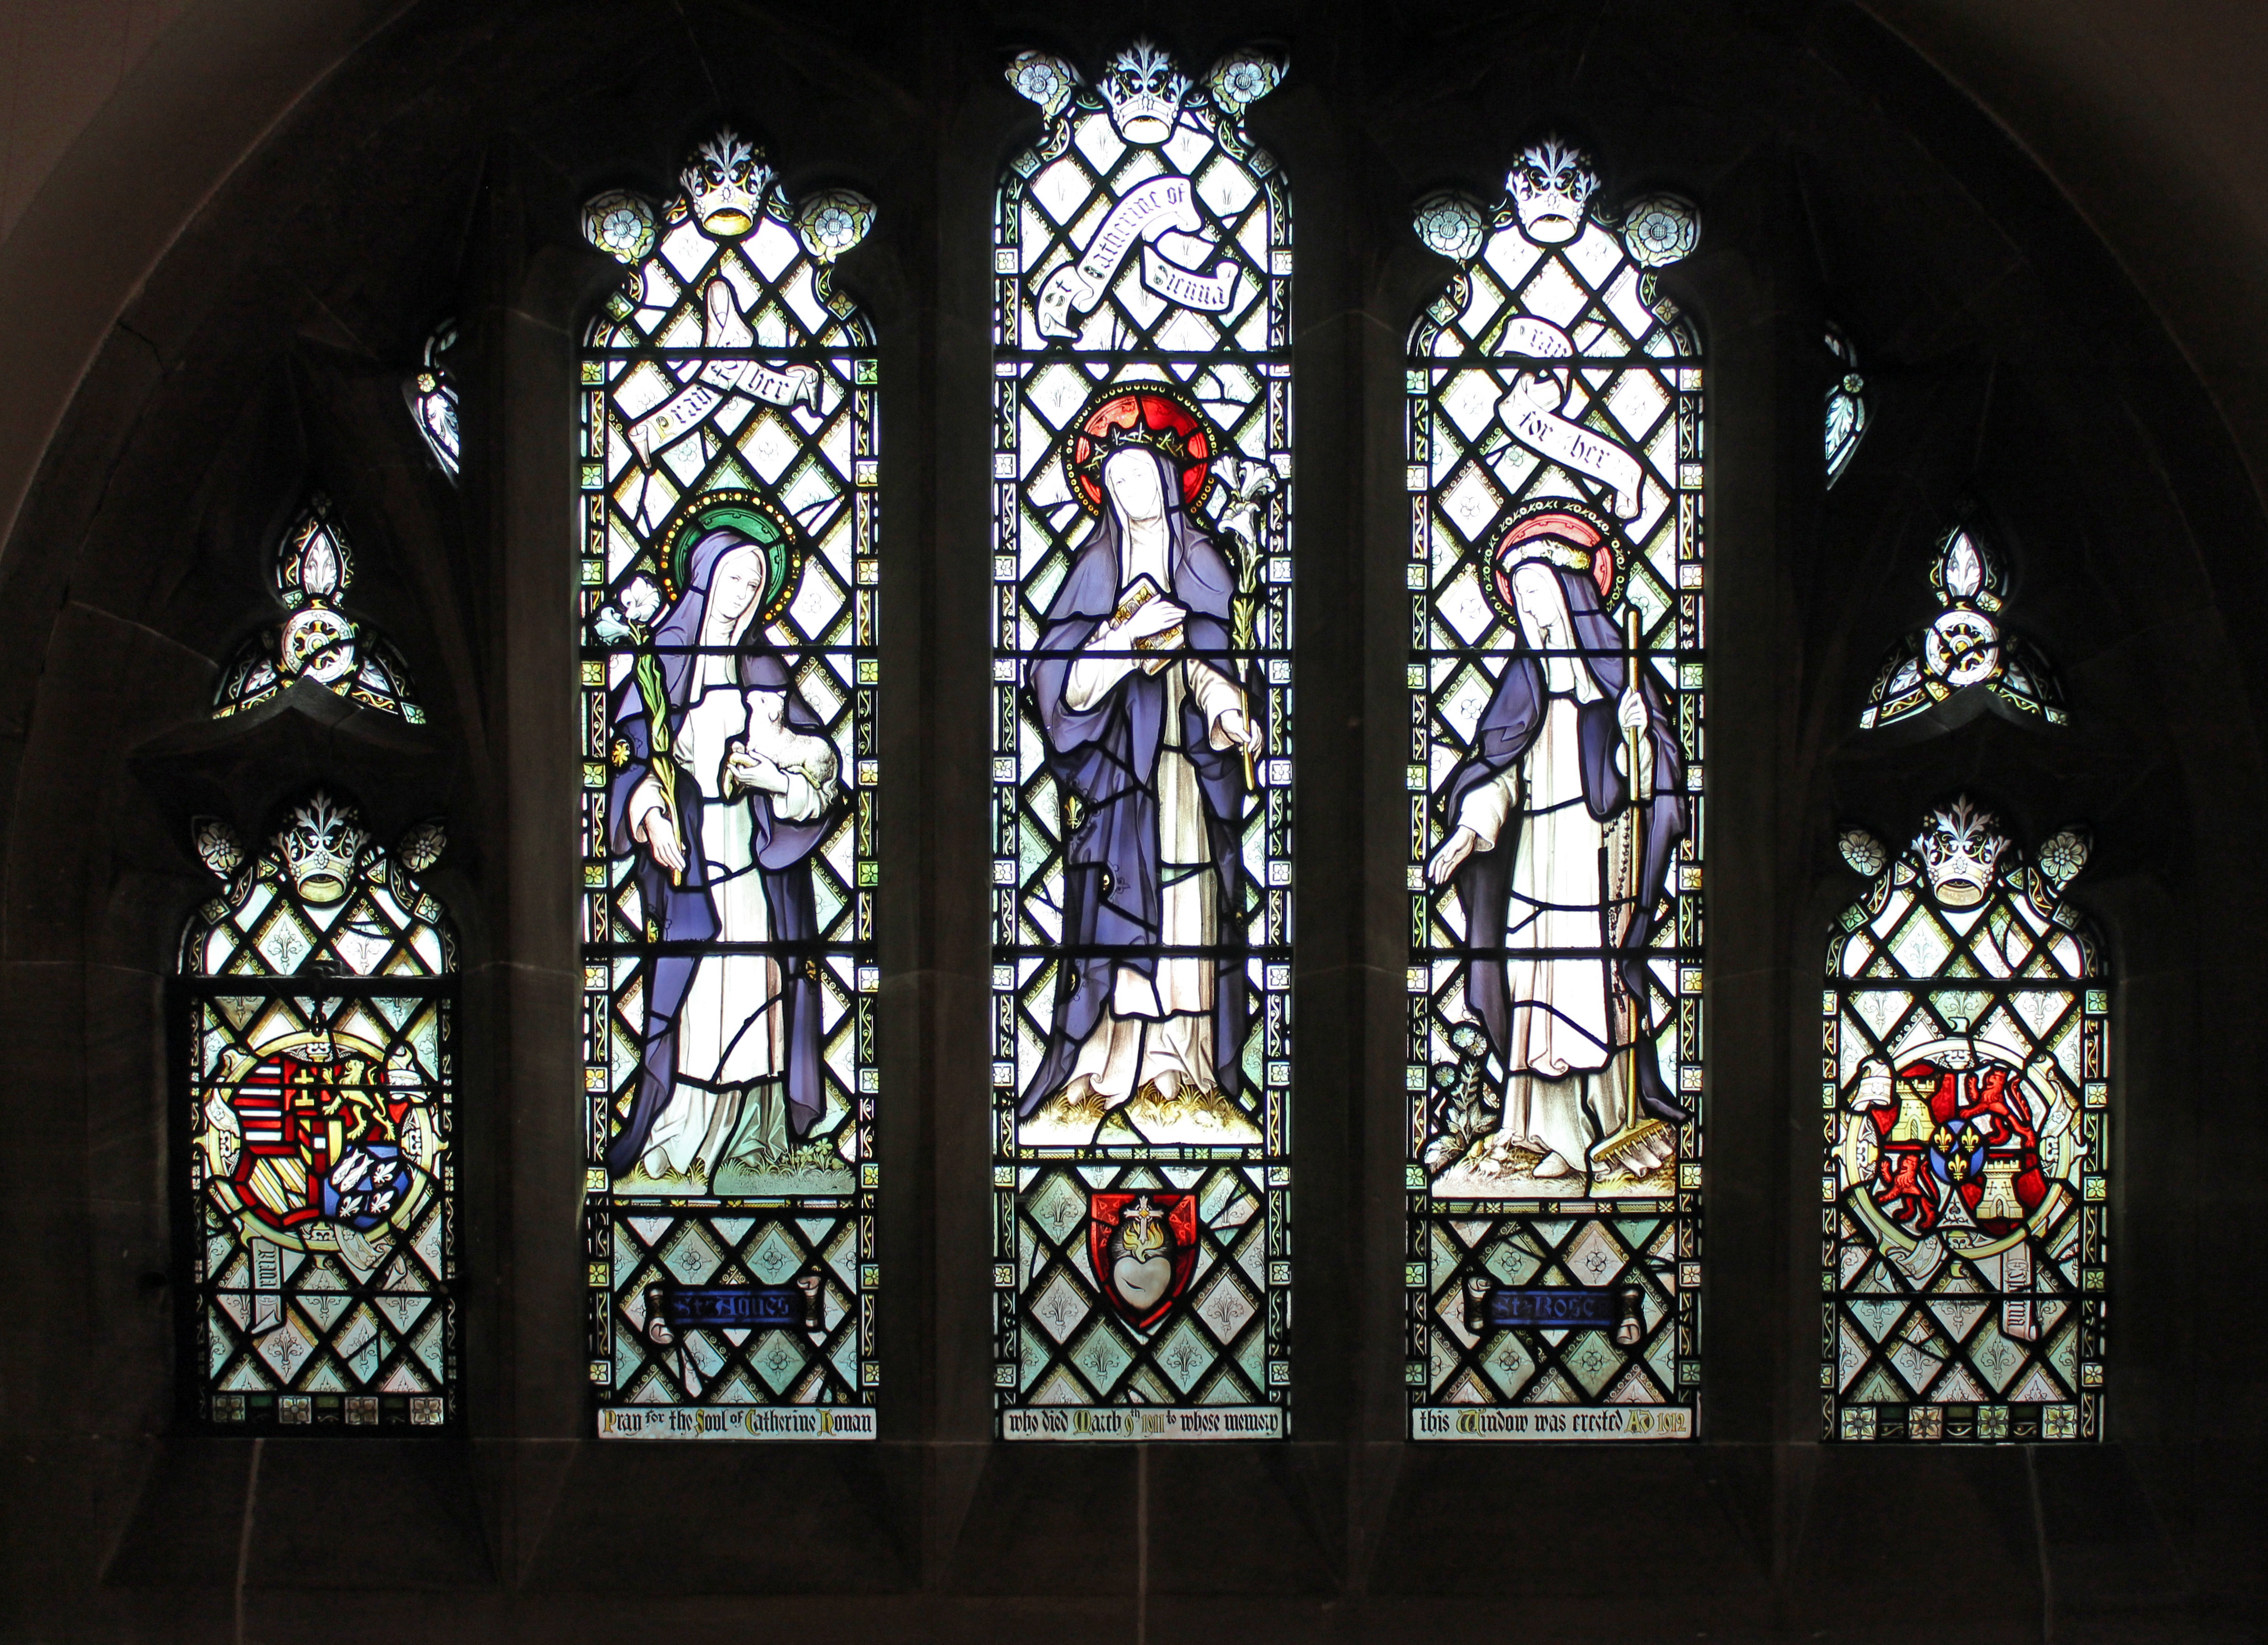 File:Trio window 1, St Clare's church, Liverpool.jpg - Wikimedia Commons